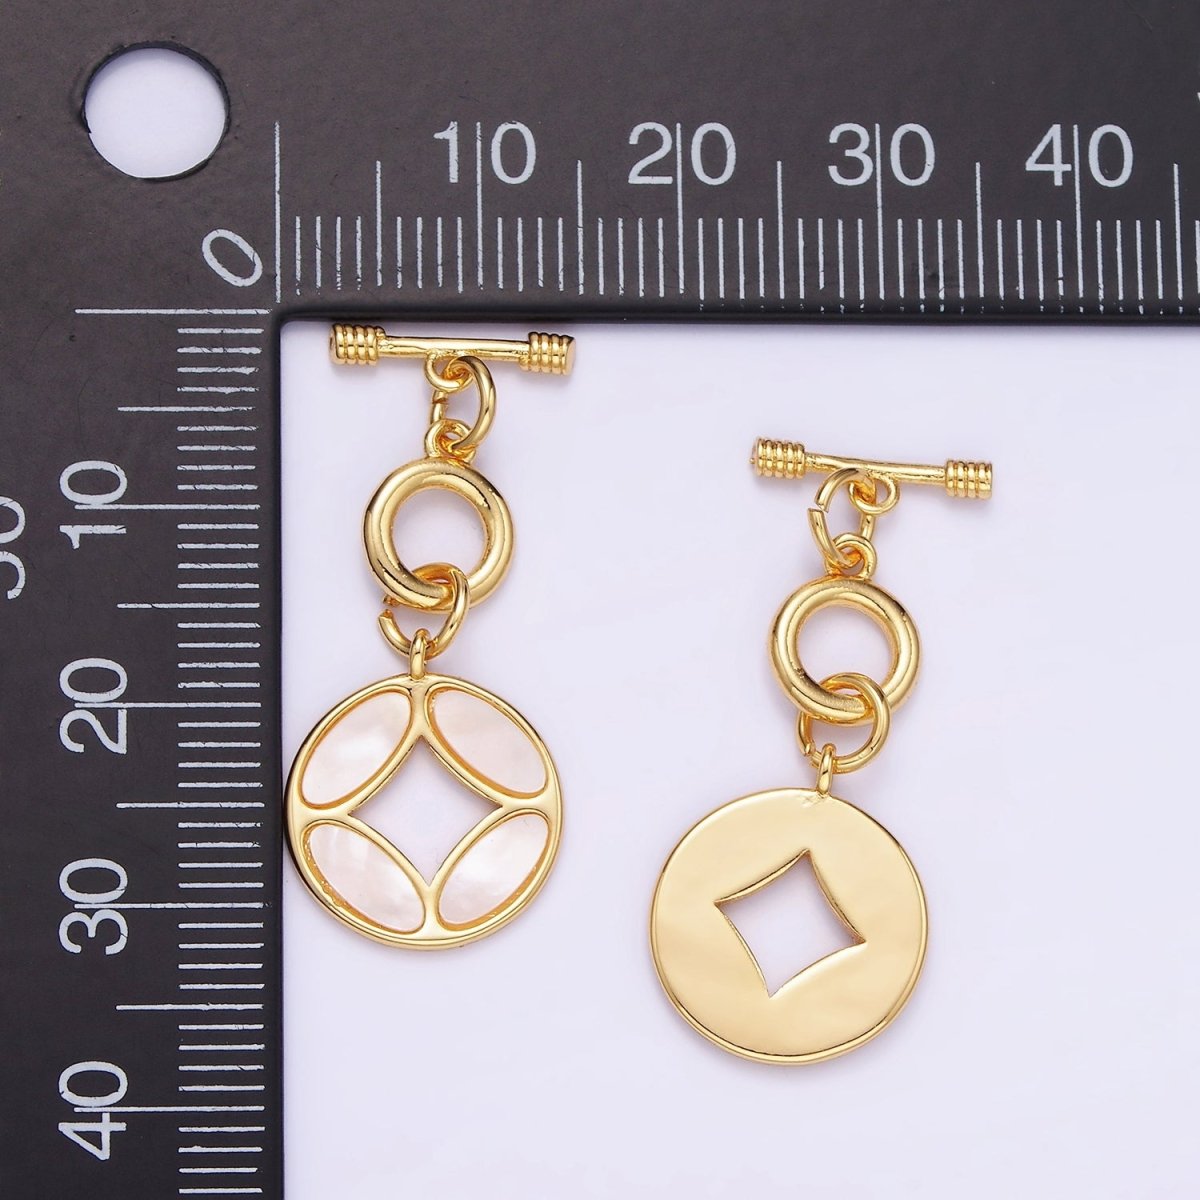 14K Gold Filled Open Pearl Quatrefoil OT Toggle Clasps Closure Jewelry Making Supply | Z-694 - DLUXCA